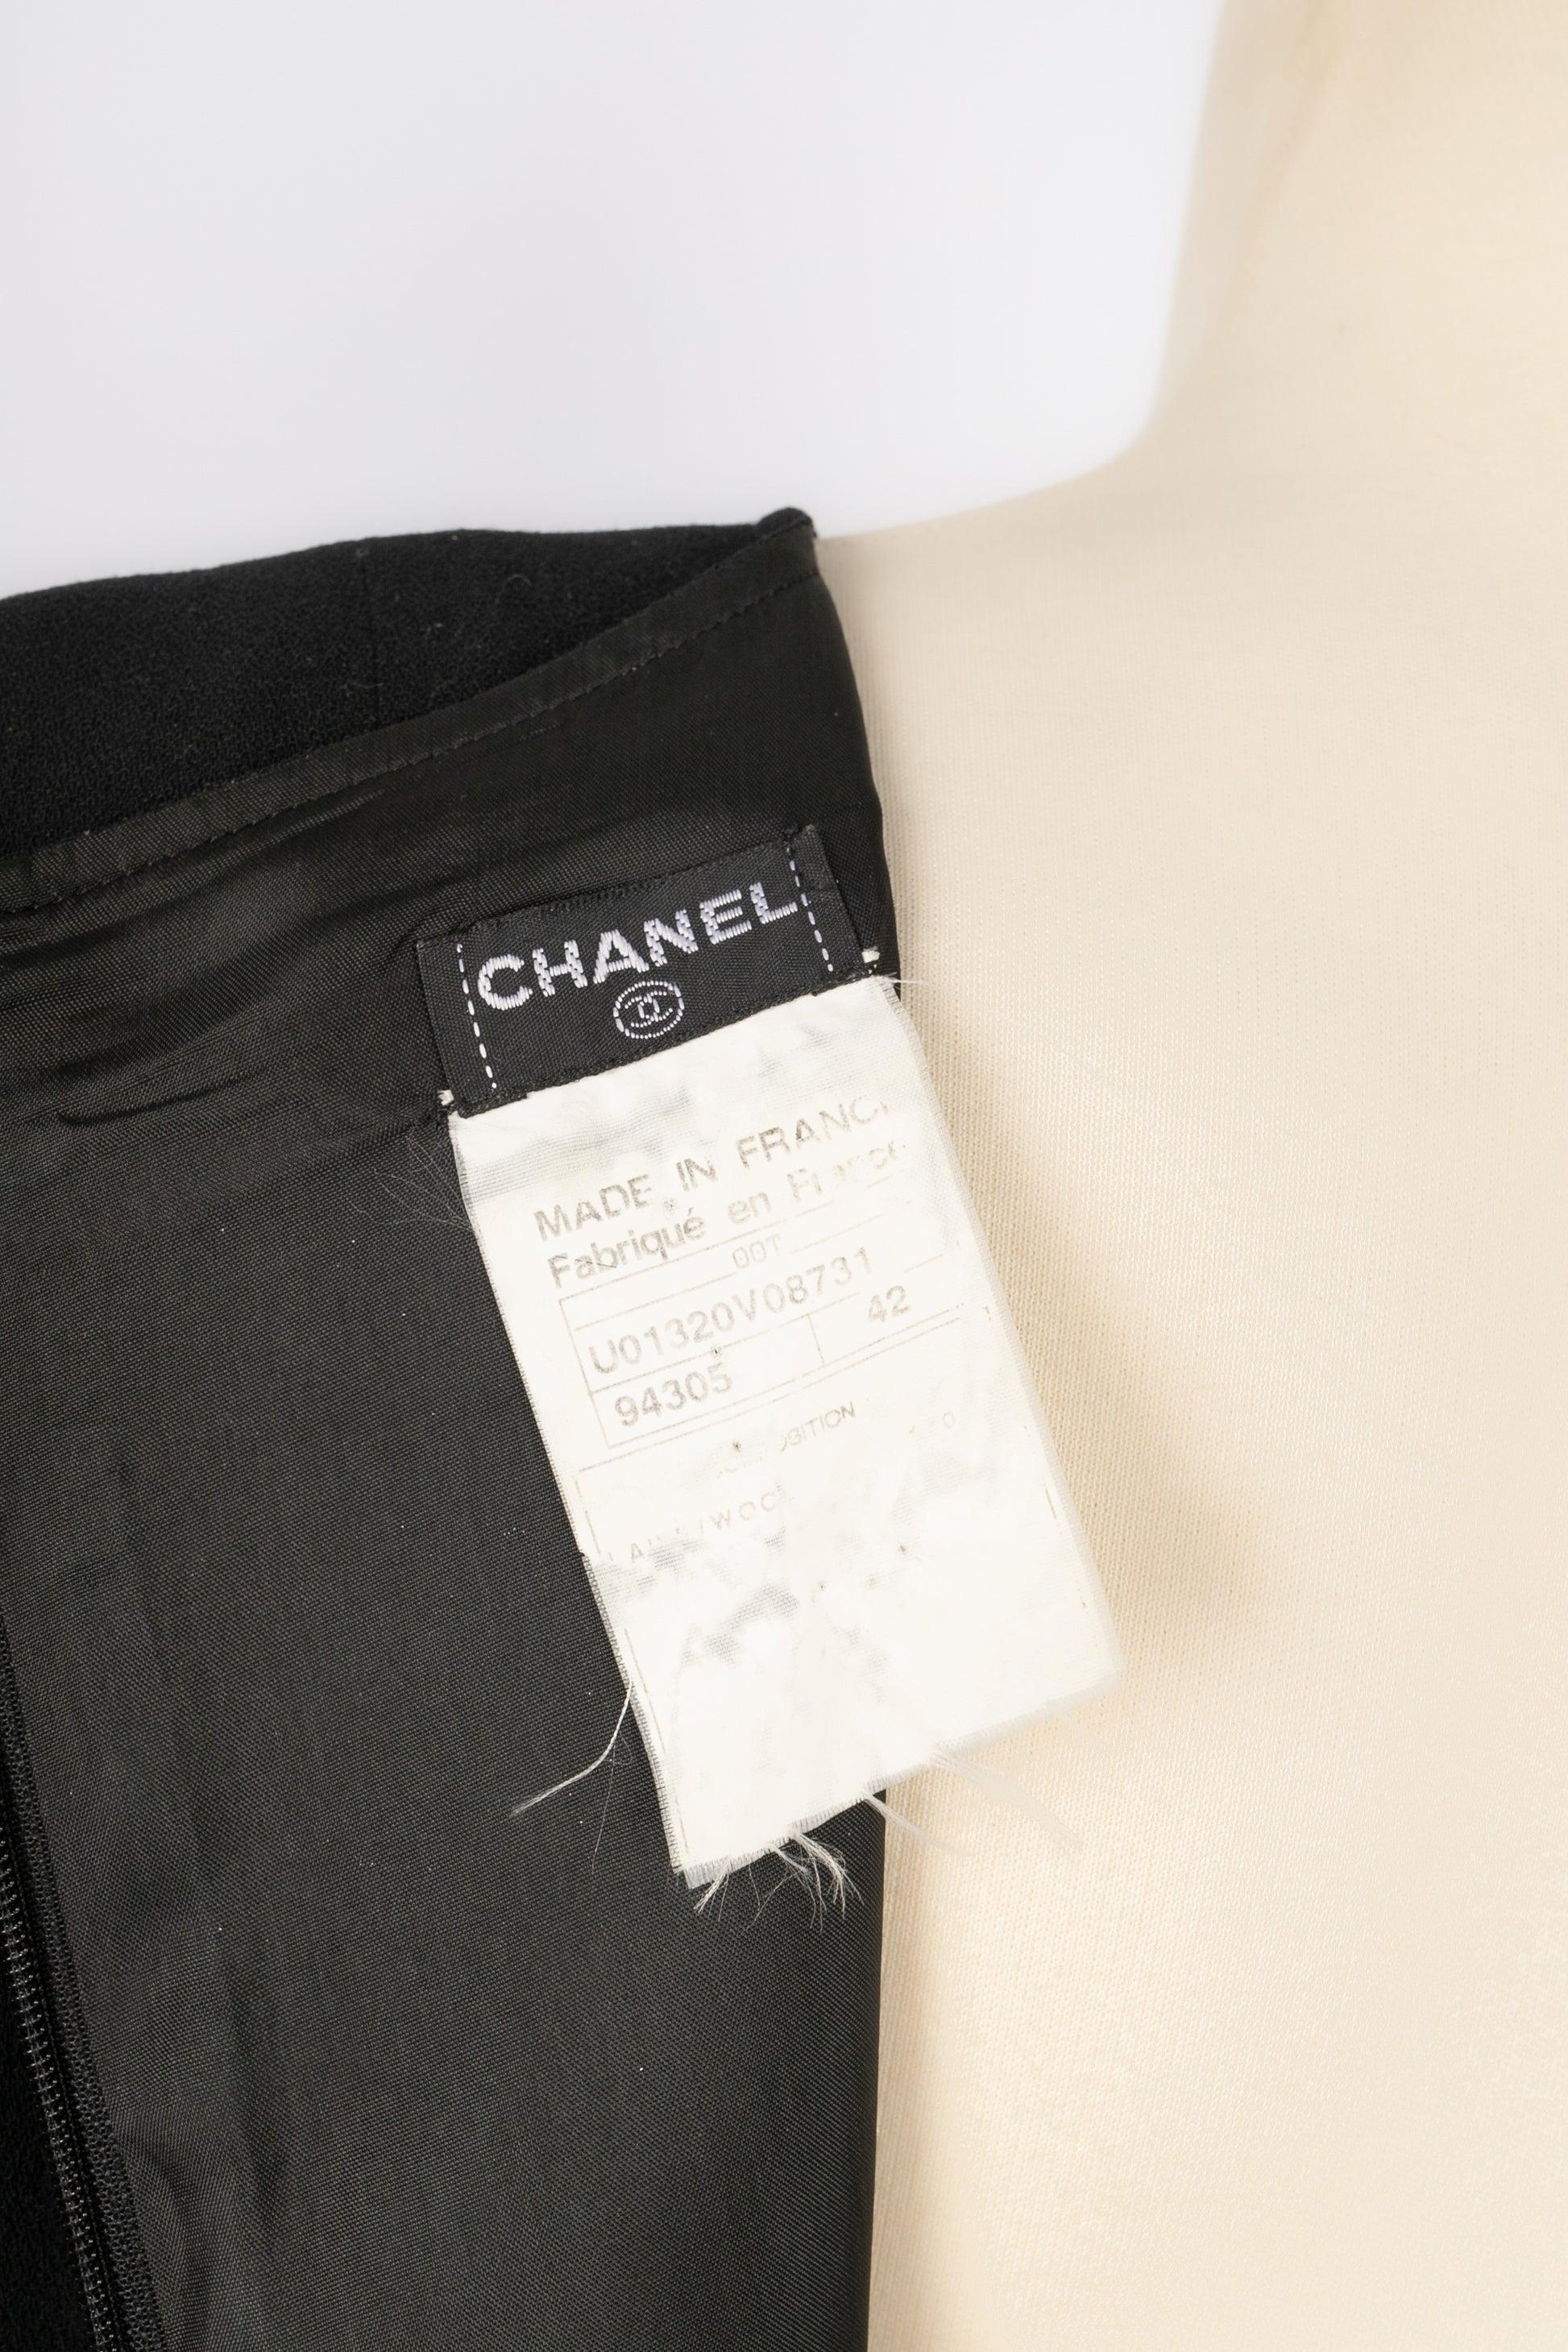 Chanel Black Blended Wool Dress For Sale 4